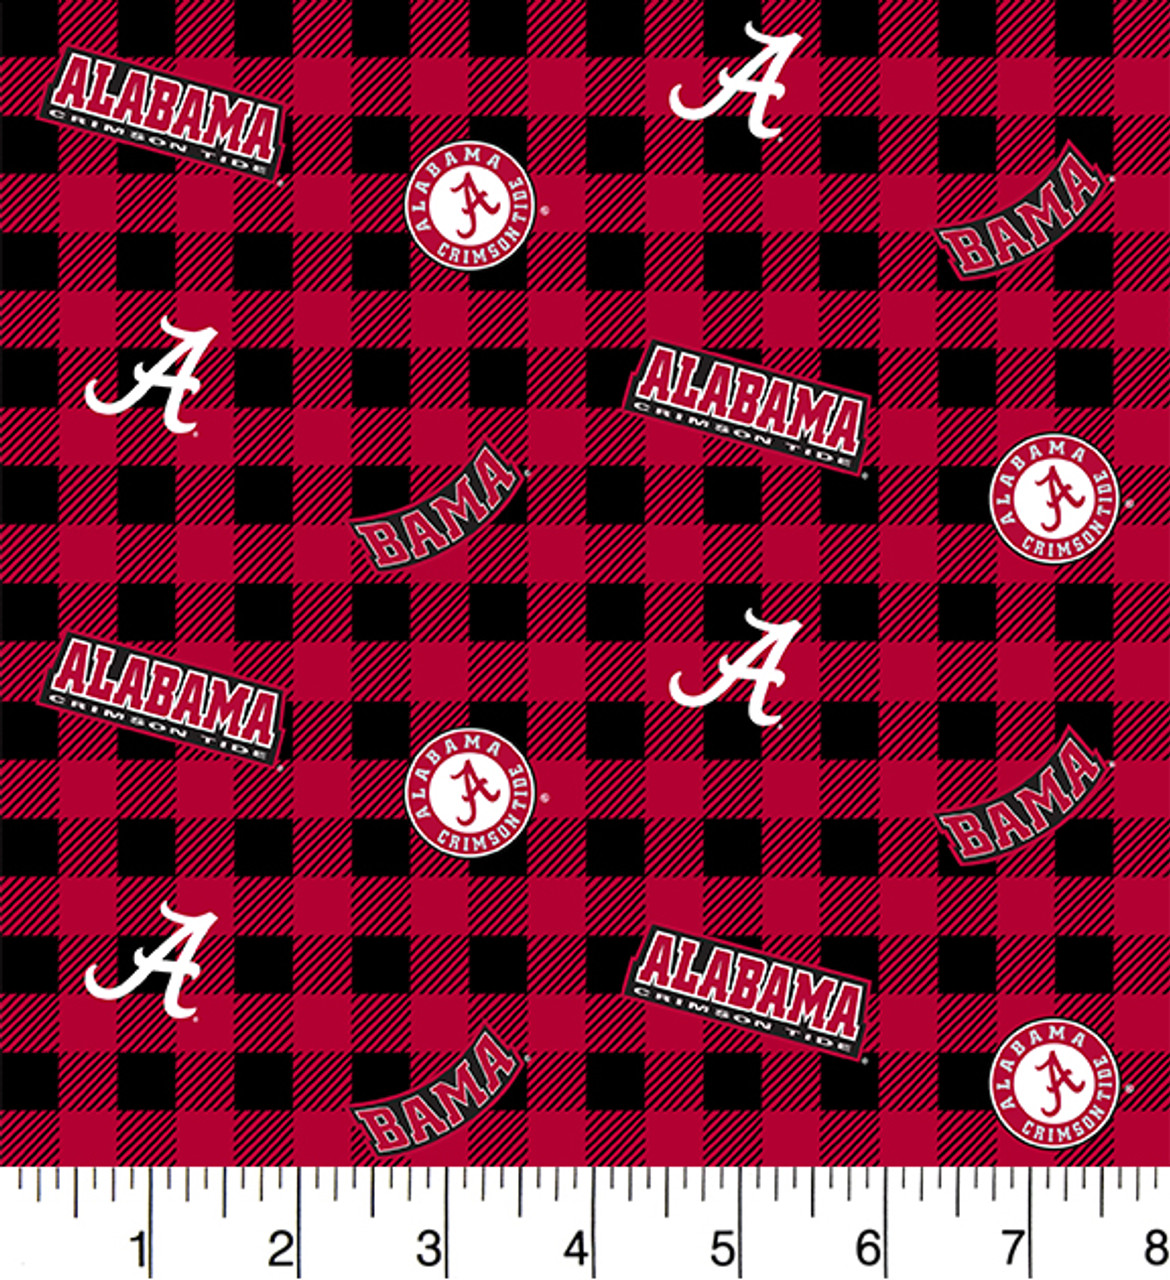 University of Alabama Crimson Tide Cotton Fabric with Buffalo Plaid Print or Matching Solid Cotton Fabrics